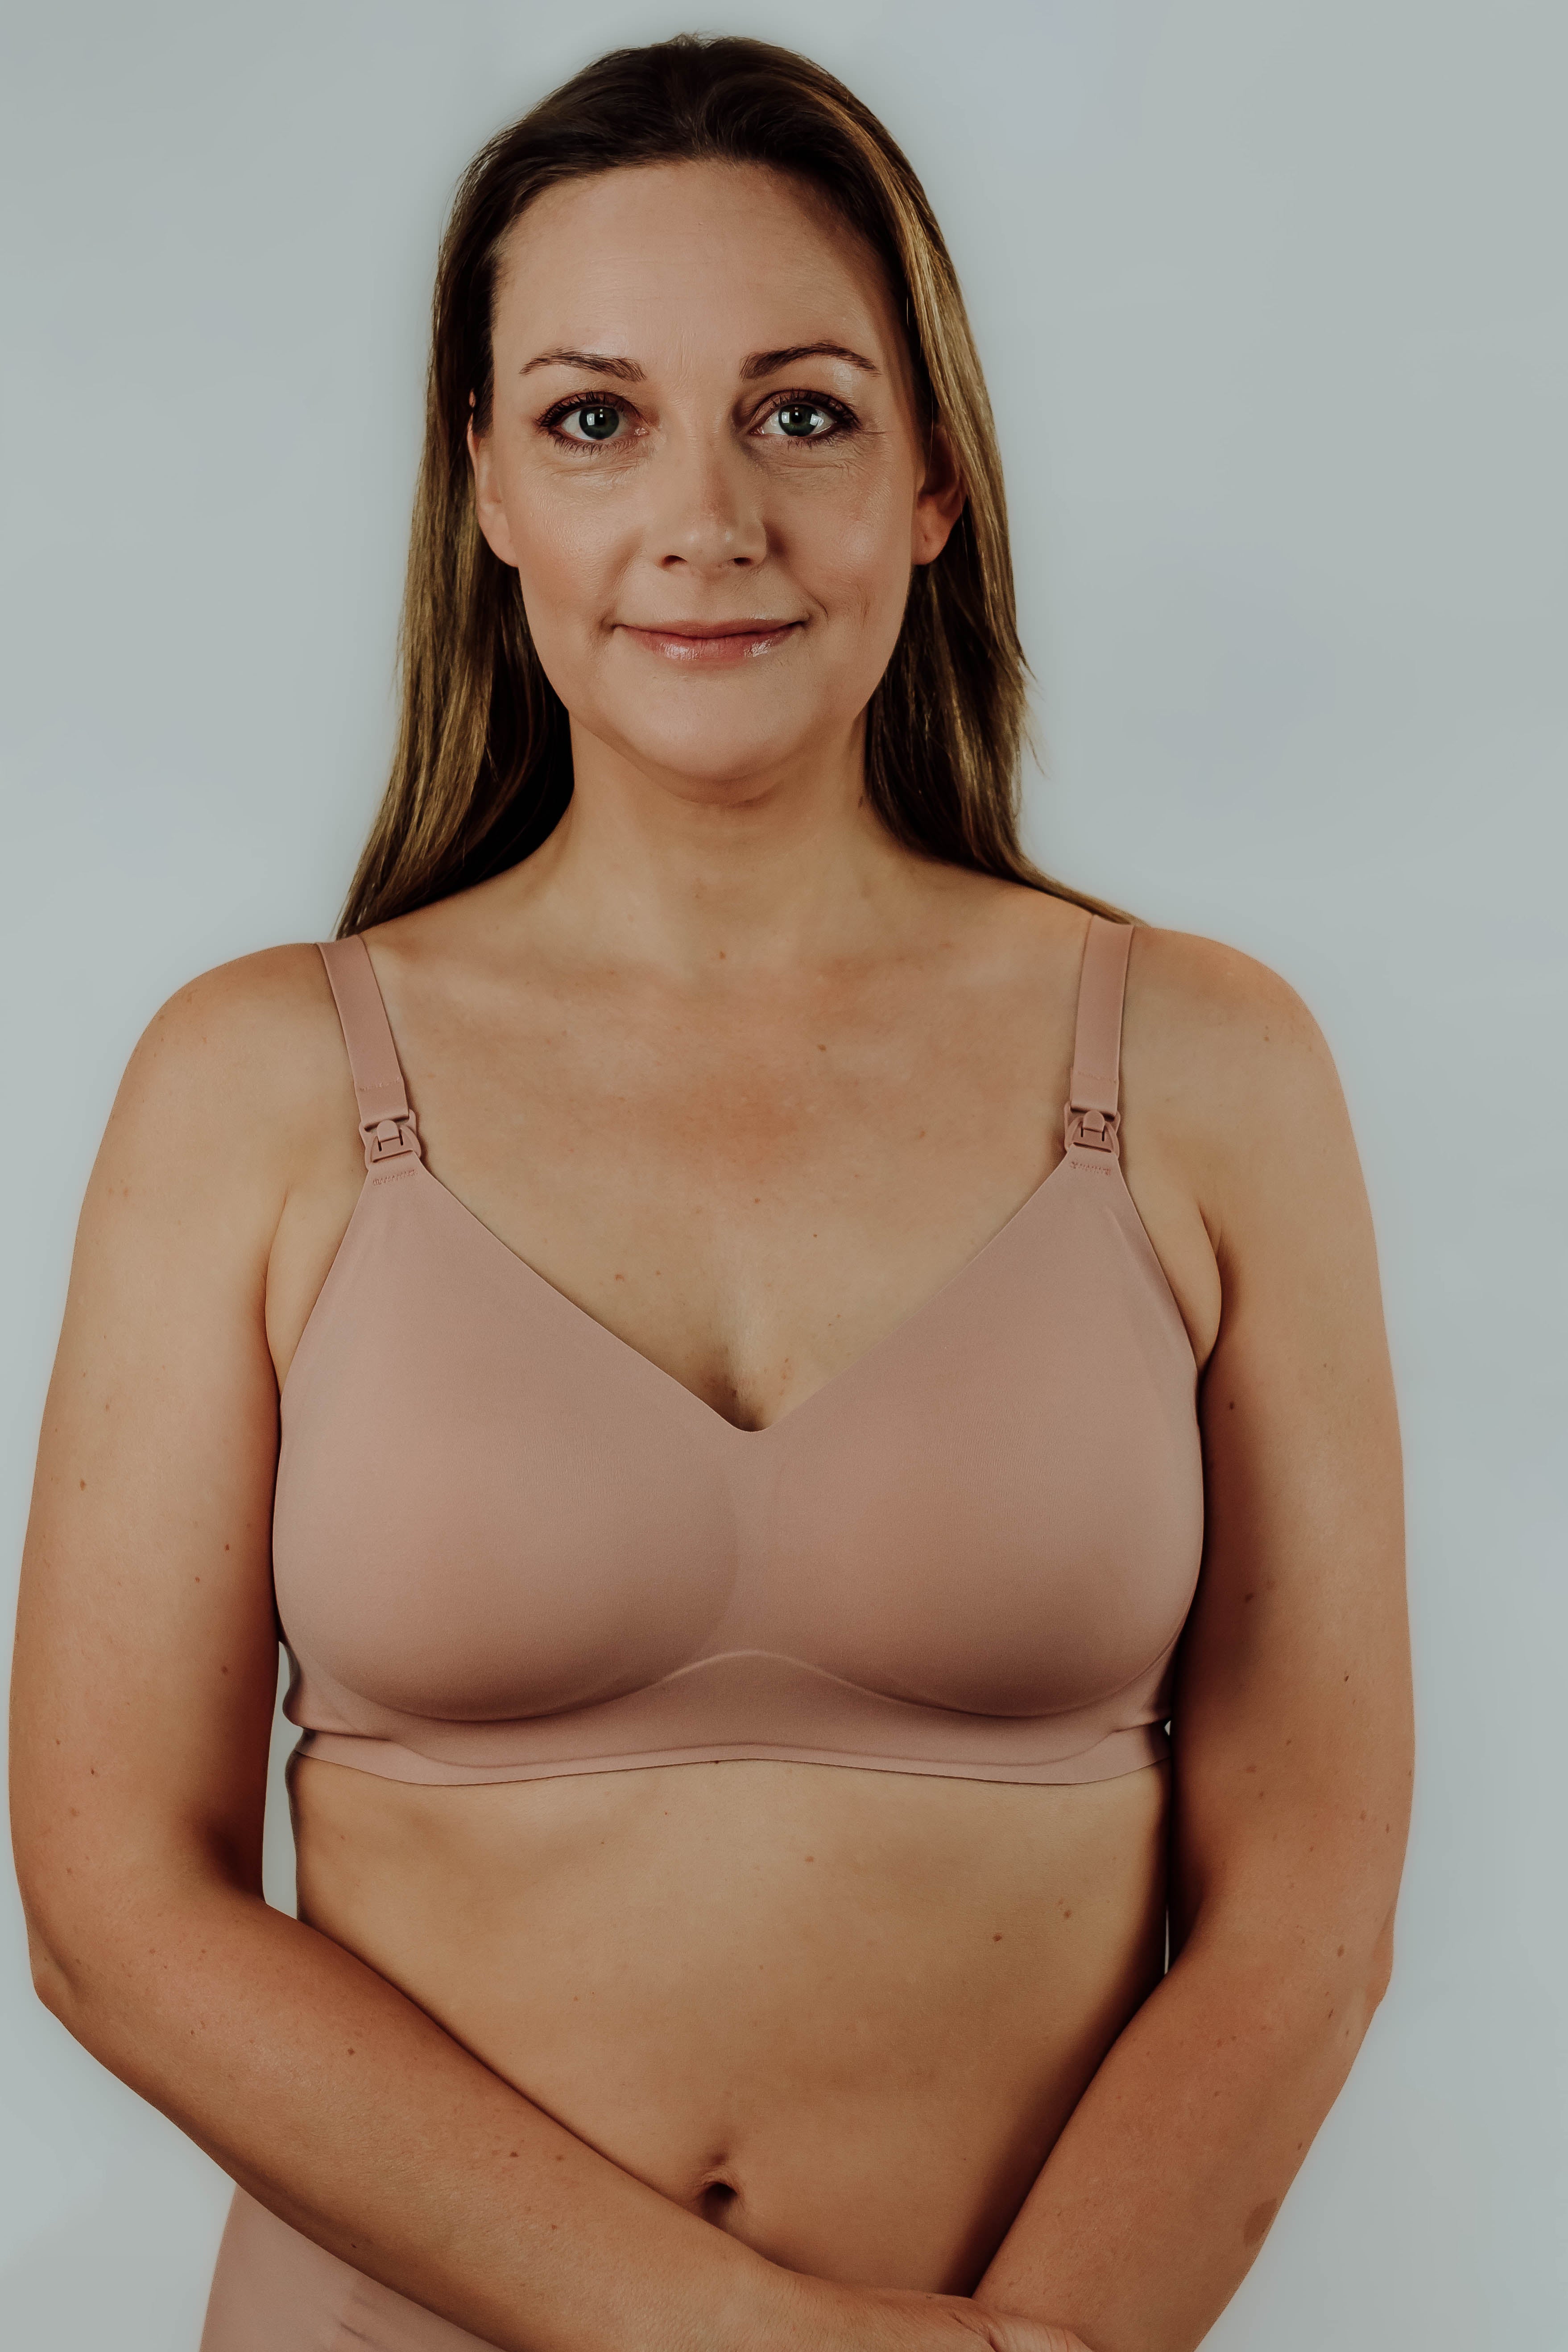 Unclipping a light pink maternity bra : r/julianaschwaab